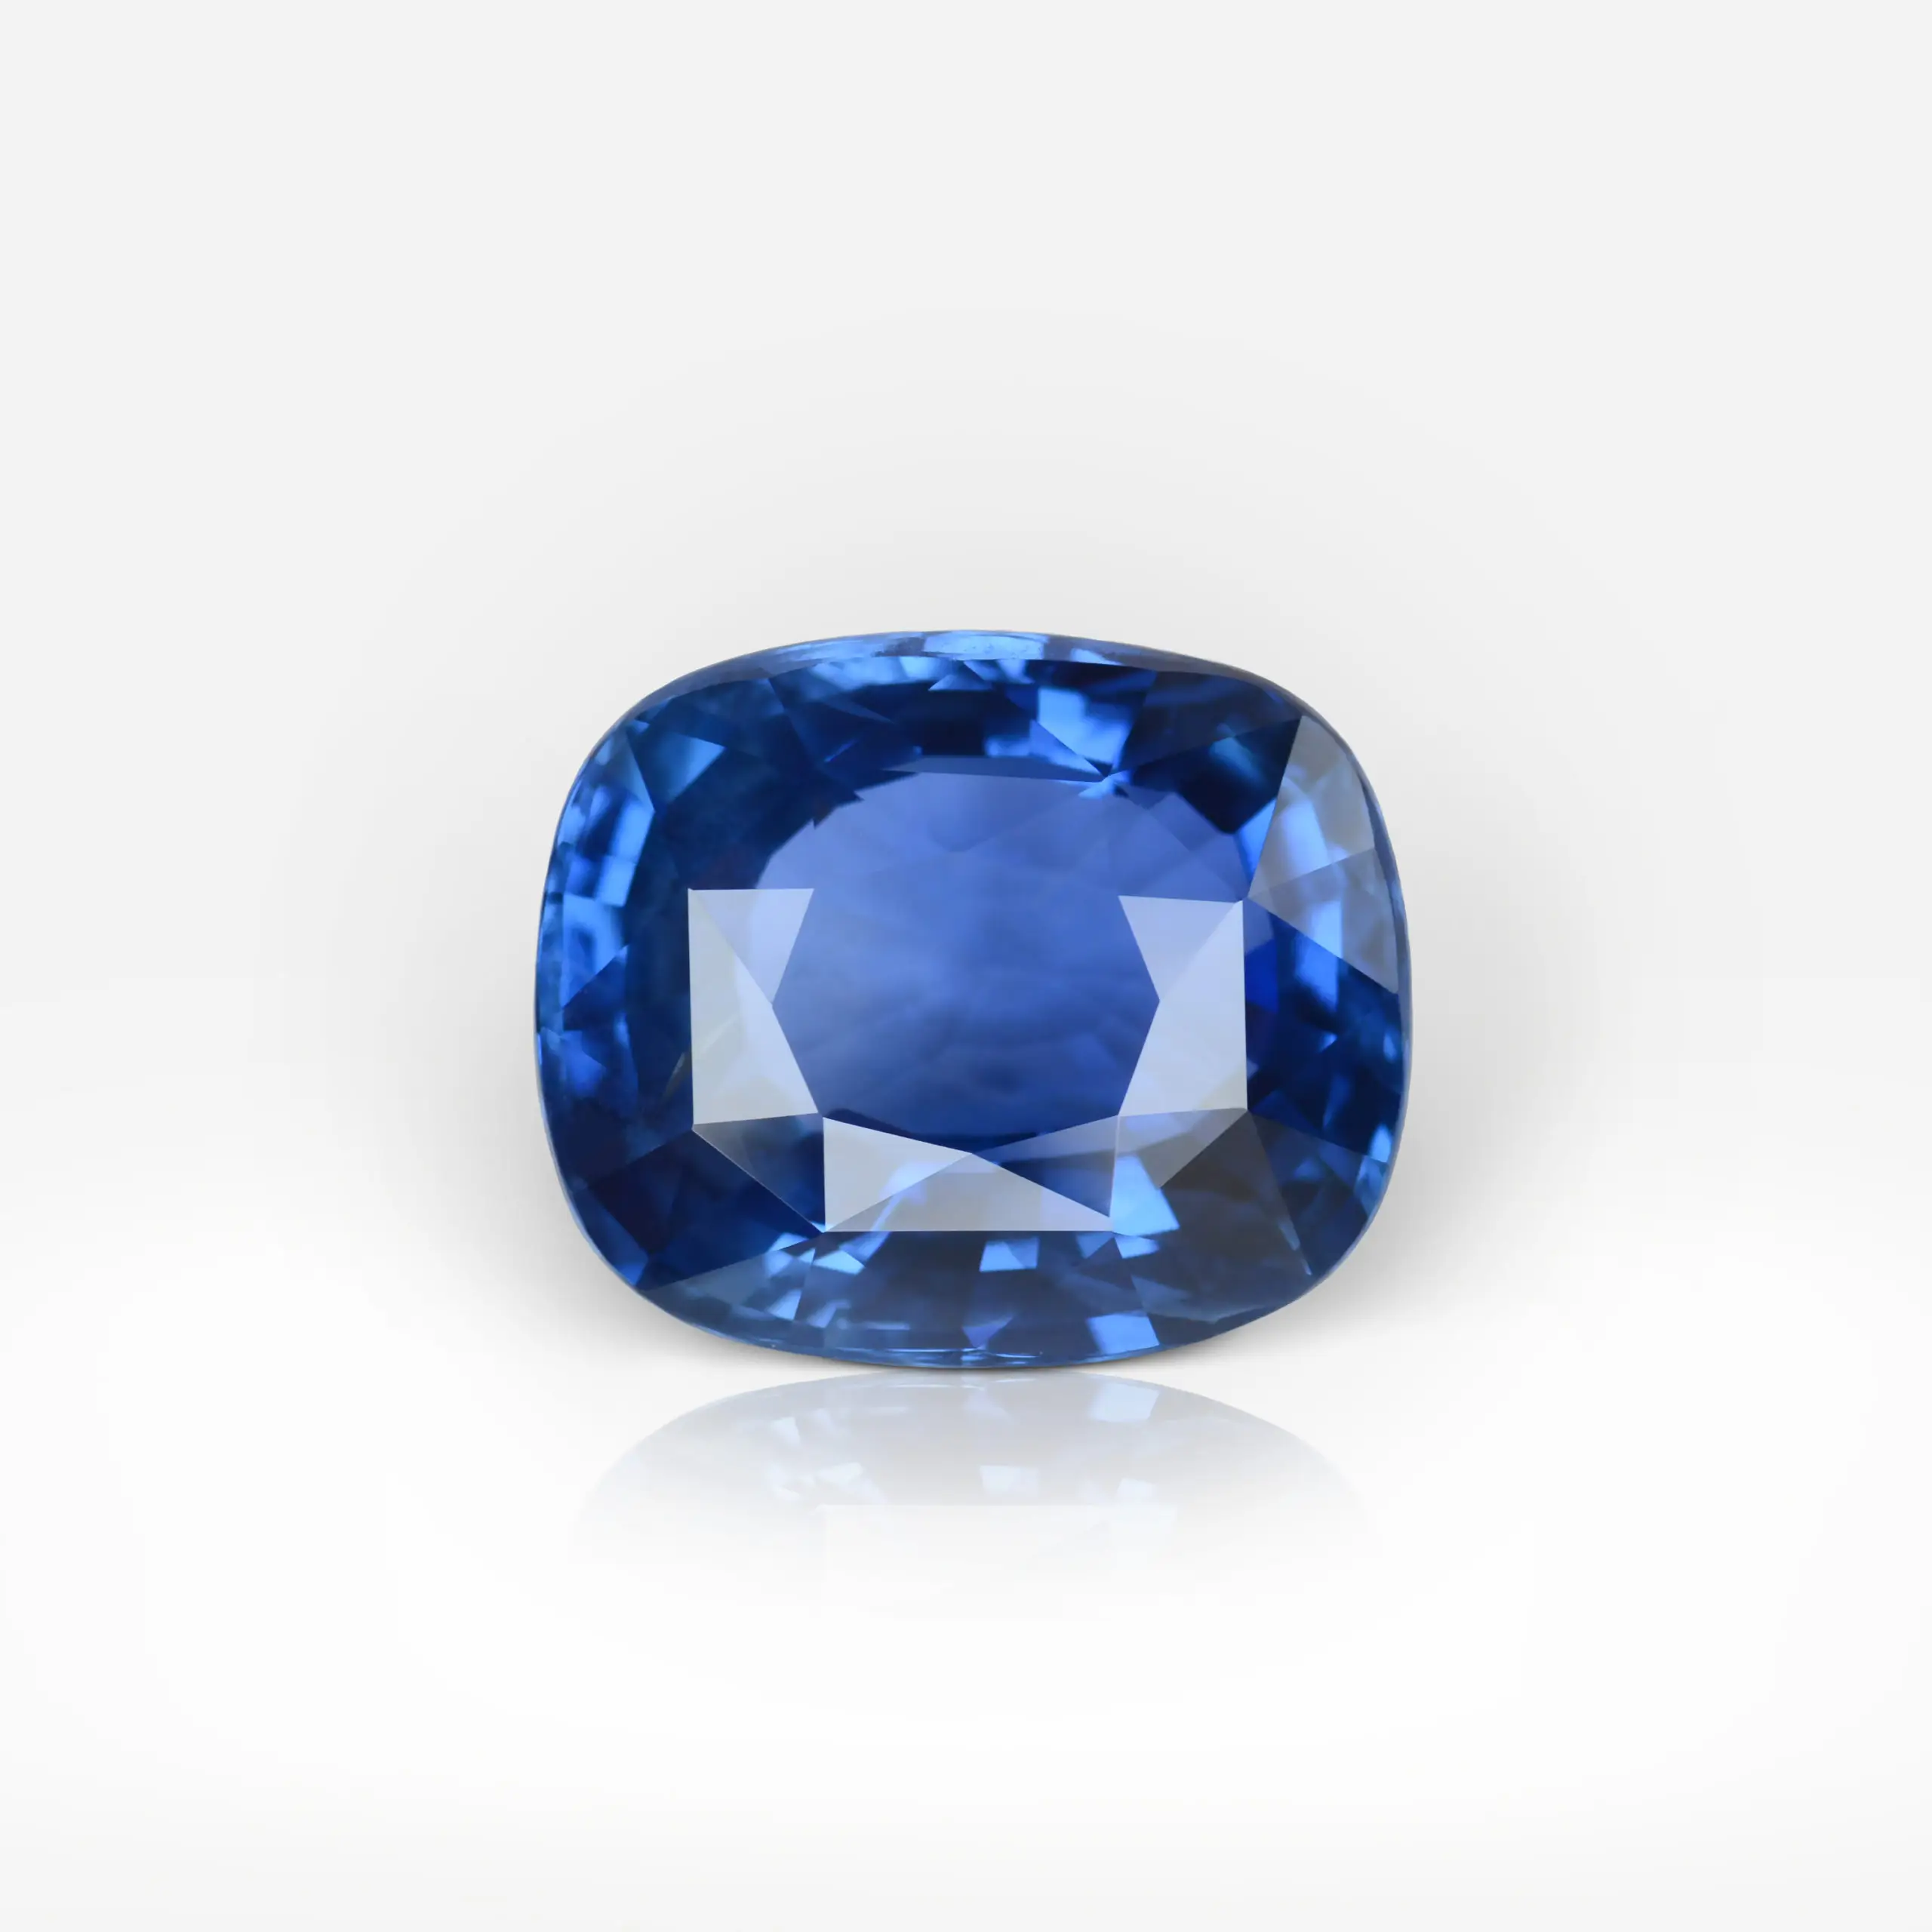 8.18 carat Cushion Shape Burmese Blue Sapphire SSEF - picture 1